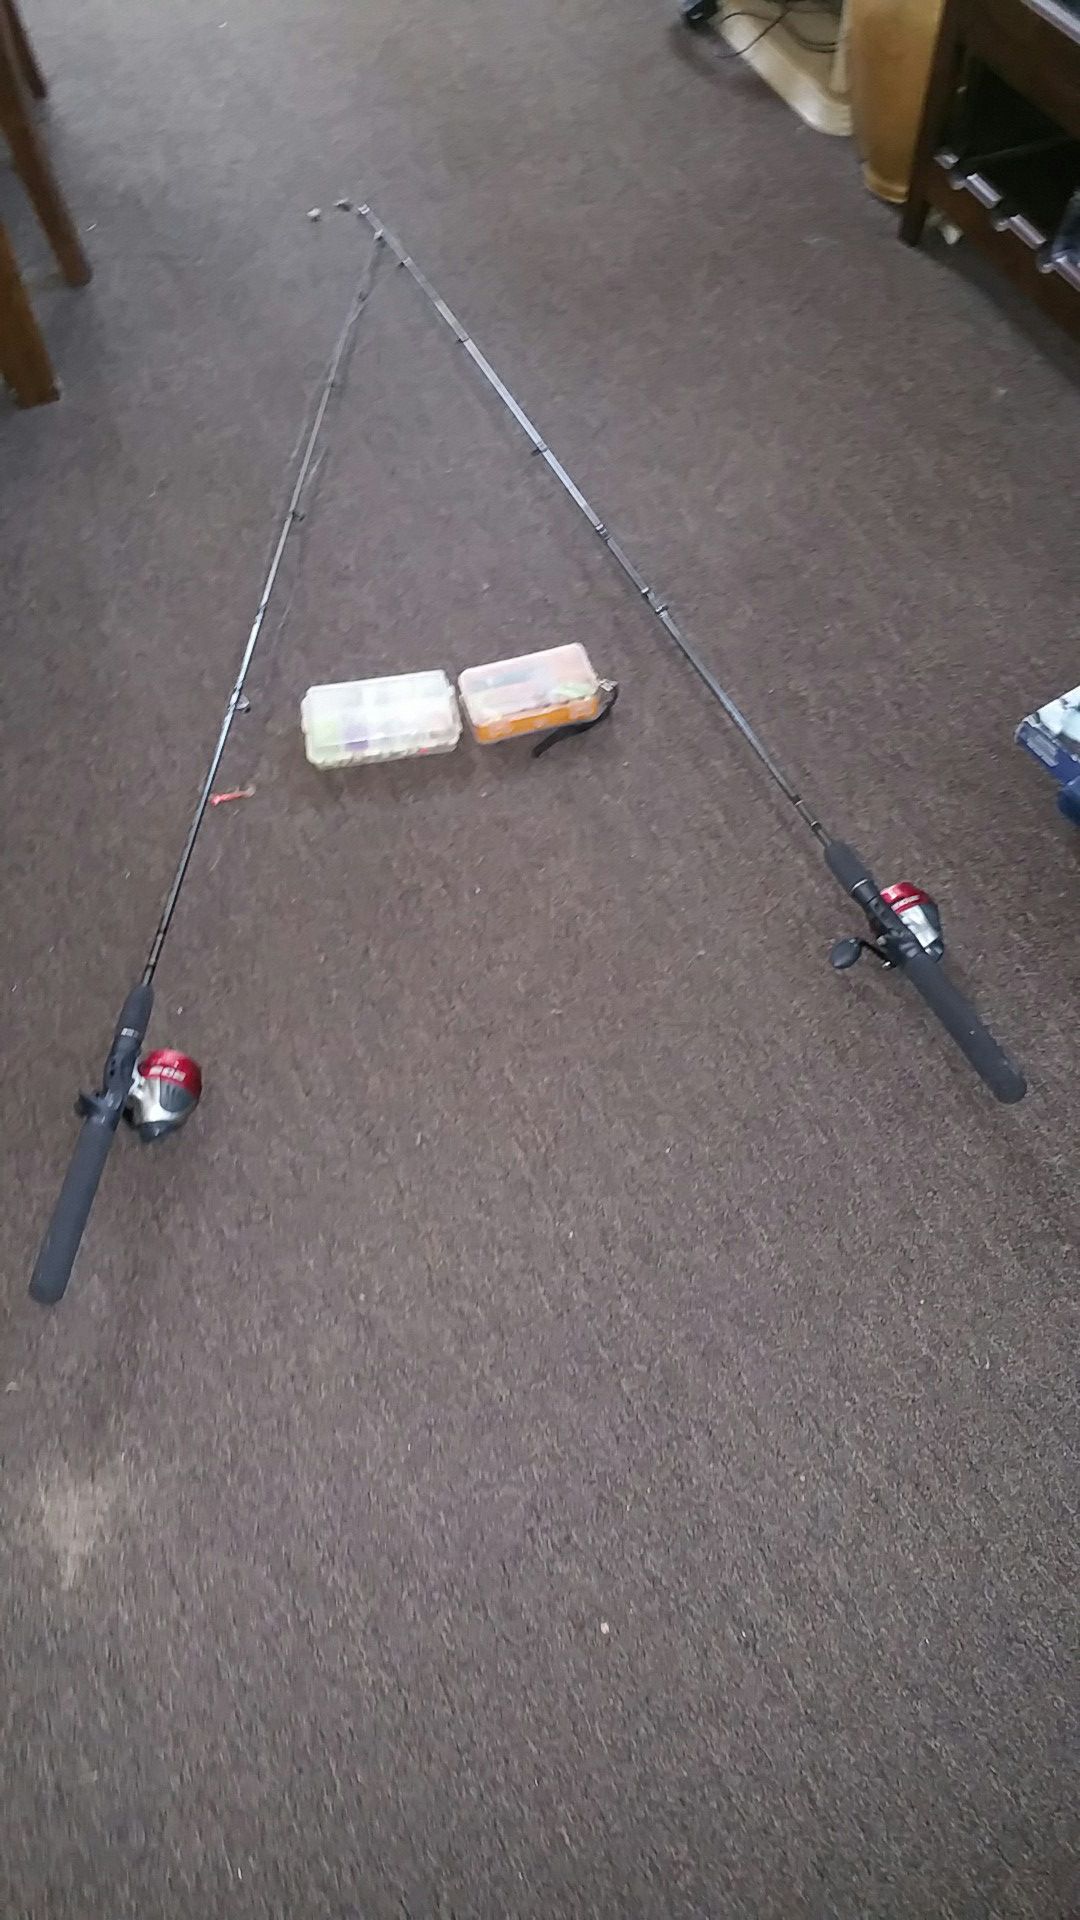 Fishing gear